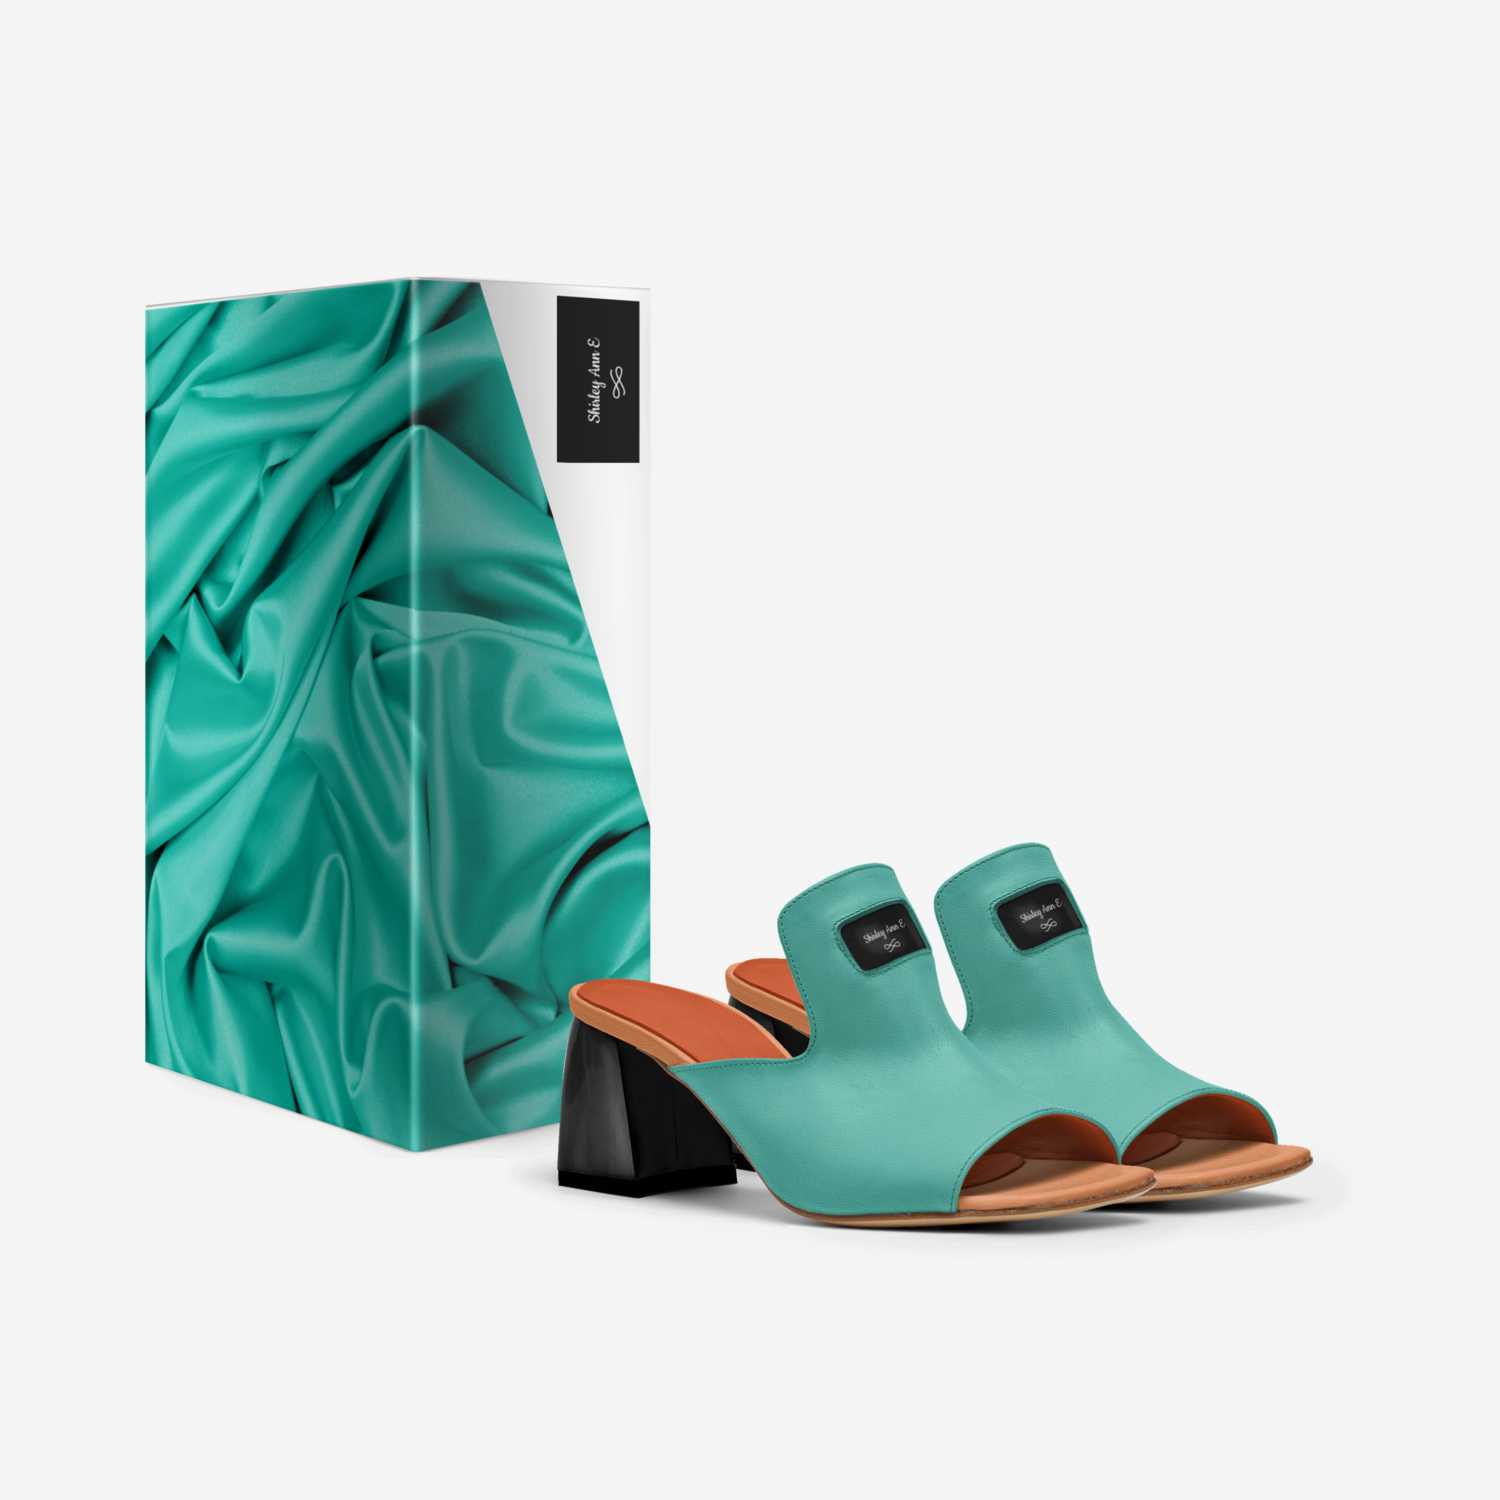 Shirley Ann E custom made in Italy shoes by Derrick Elliott | Box view